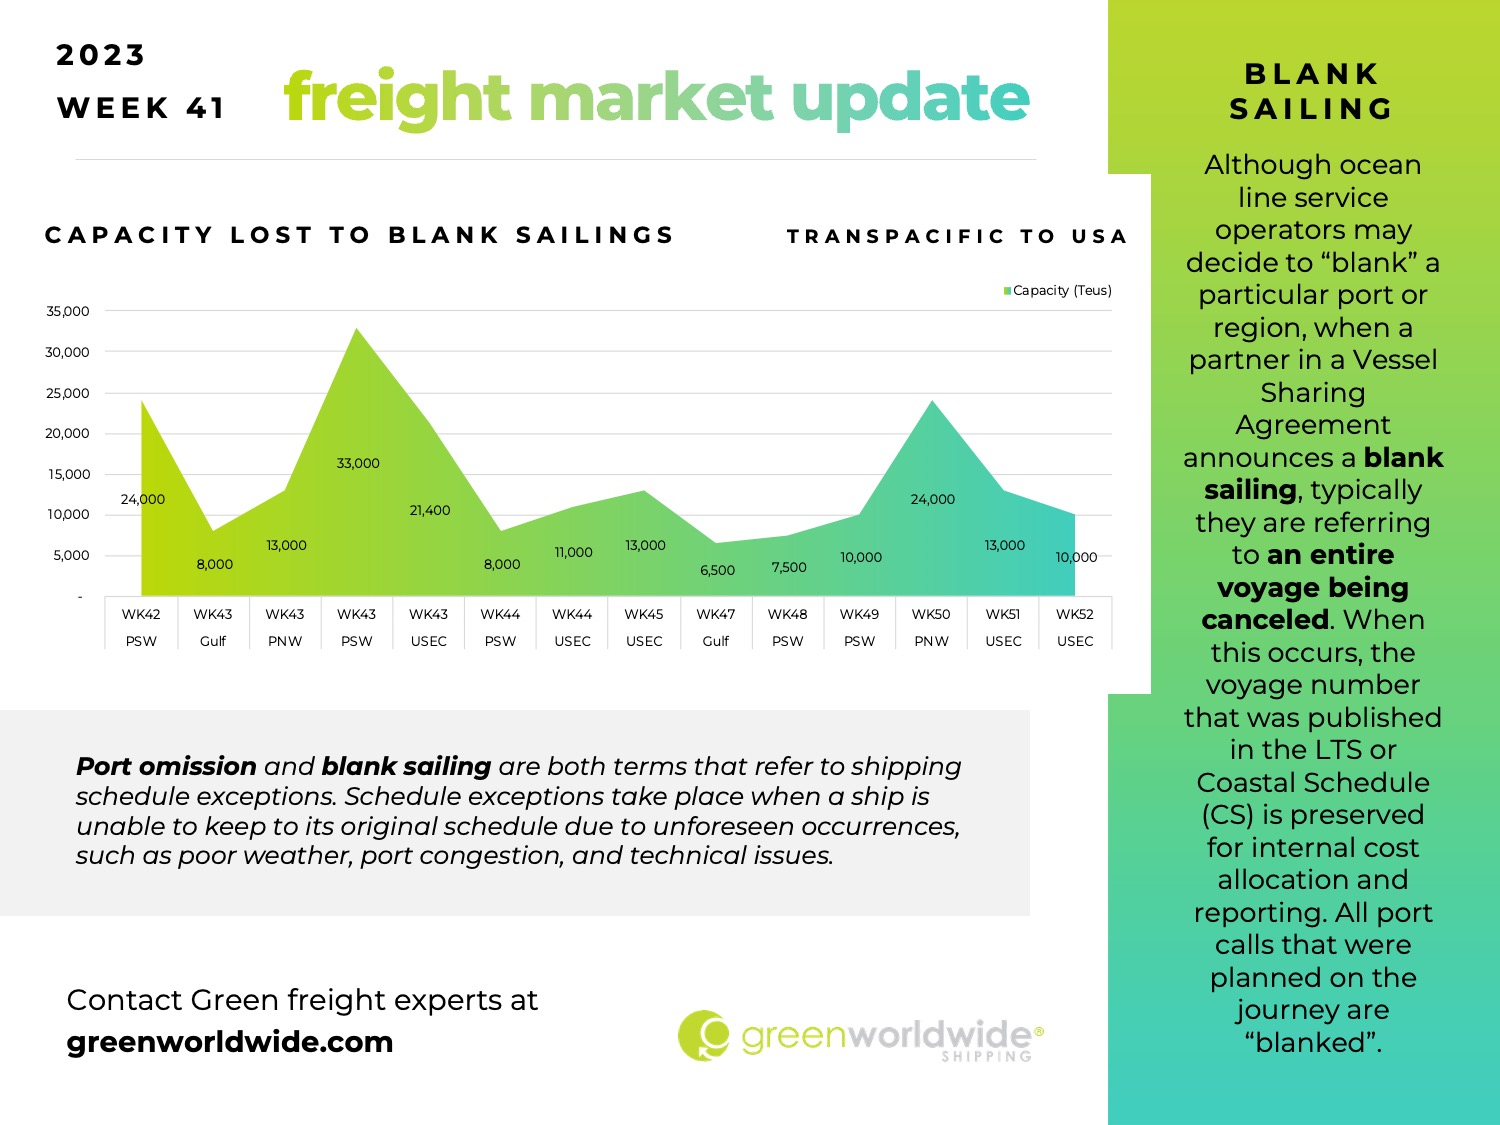 Green Worldwide Shipping, freight market update, 2023 week 42, tmf increase, rail car shortage, transatlantic, latam, transpacific, capacity, freight forwarding